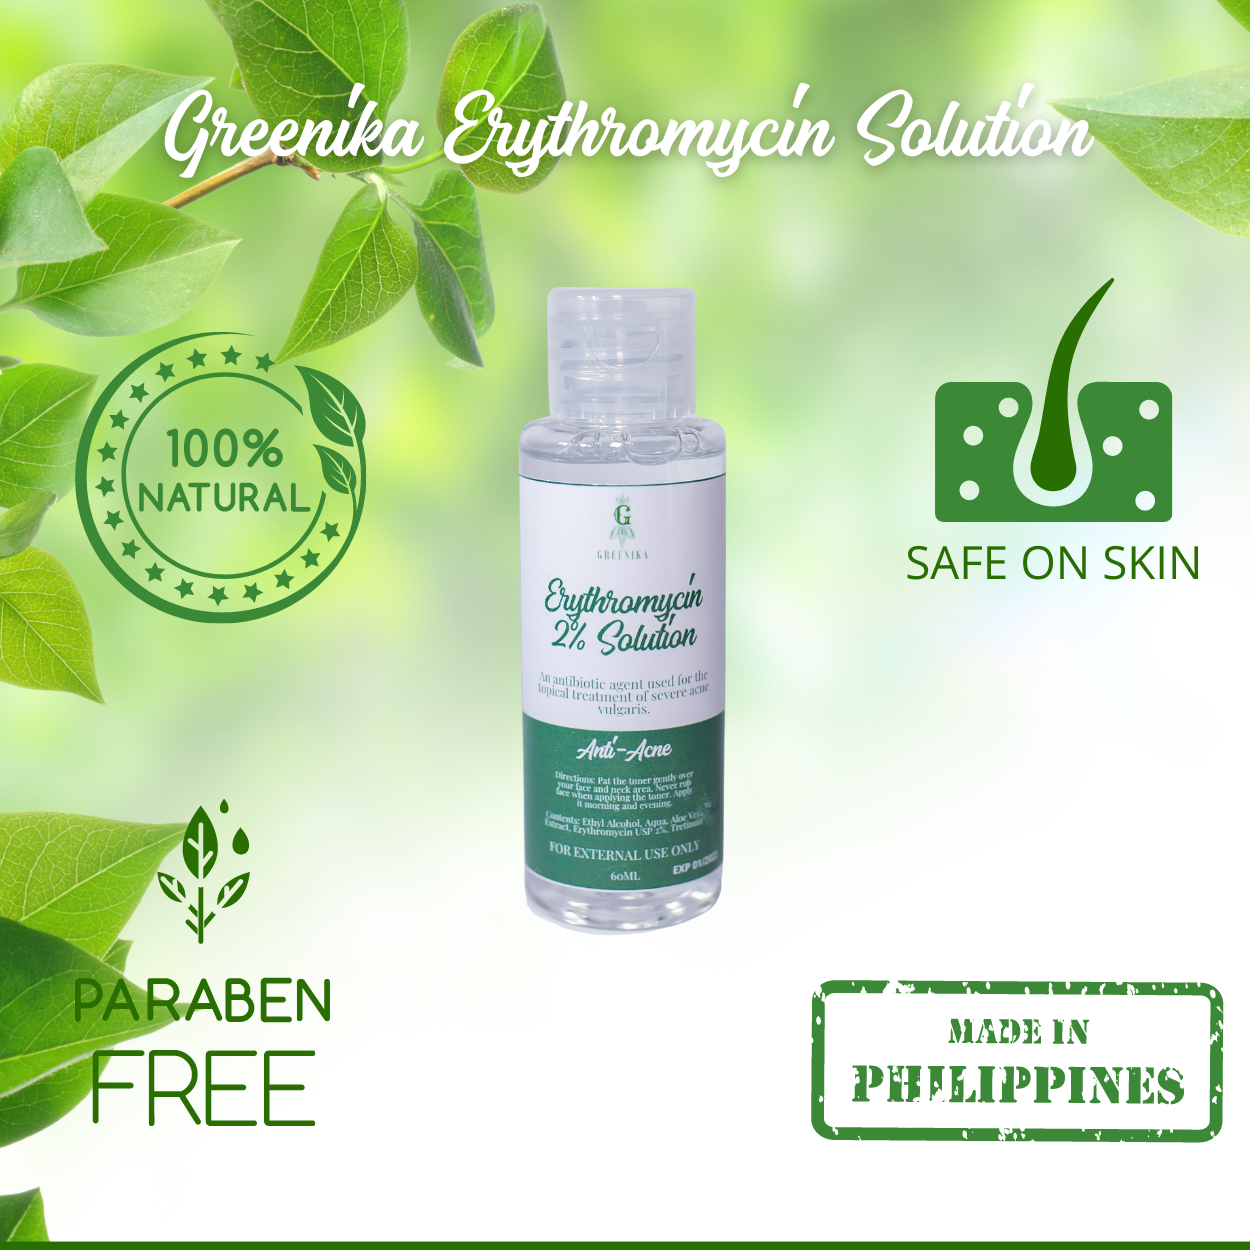 Greenika Erythromycin 2% Solution